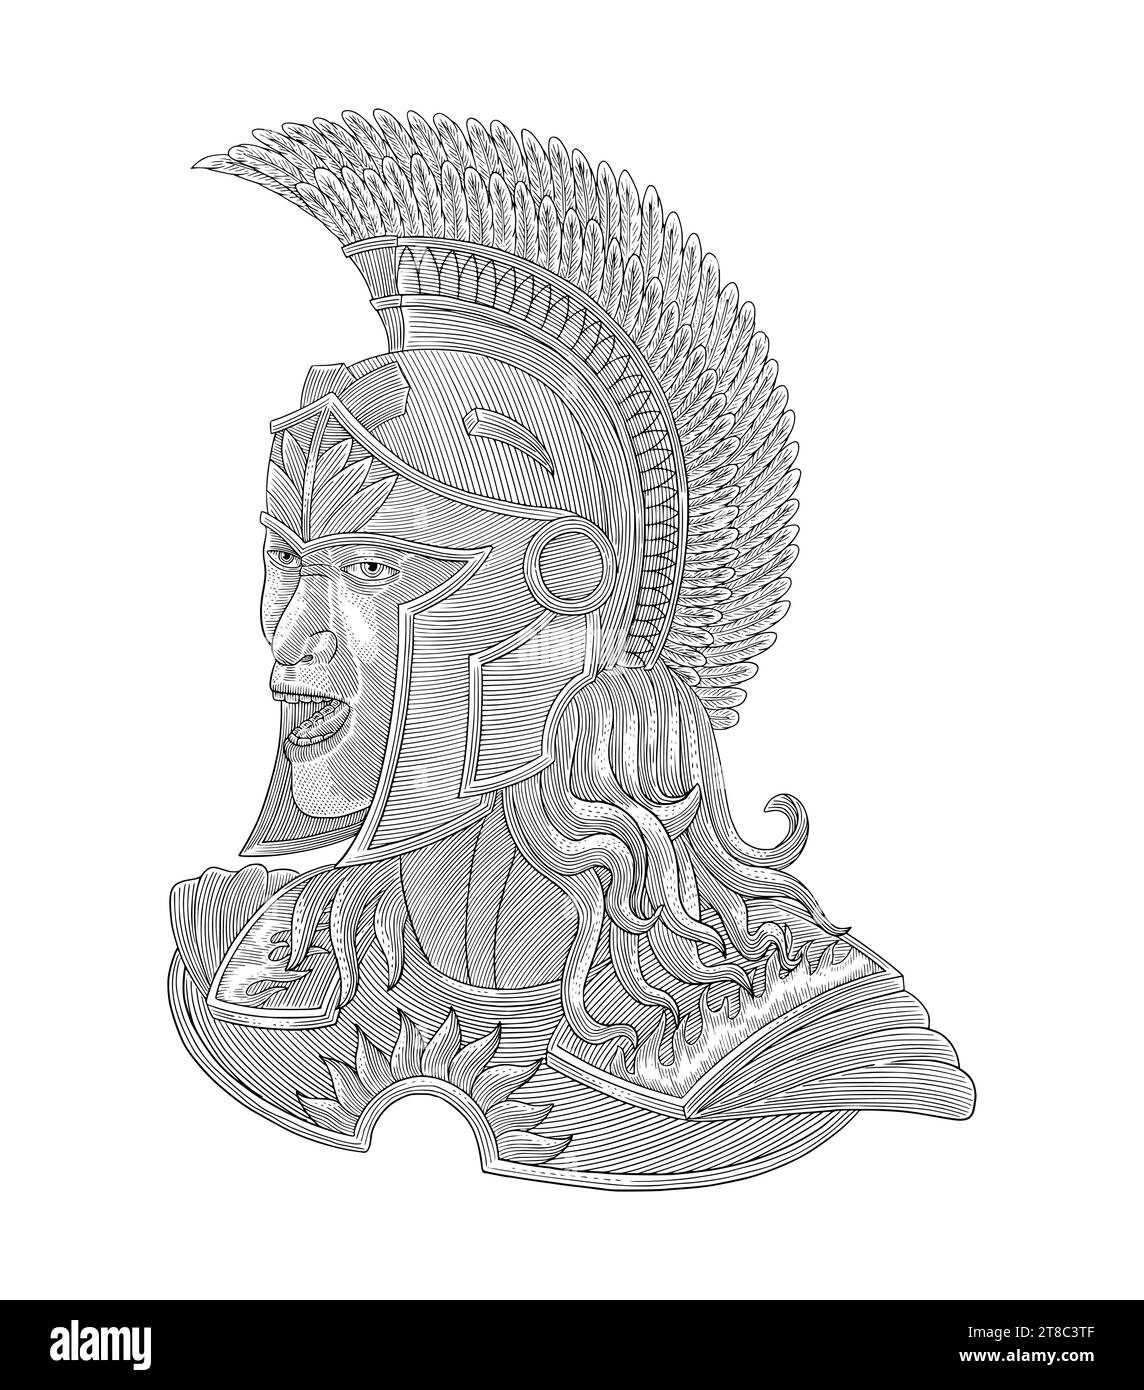 Aggressive Spartan warrior, Vintage engraving drawing illustration Stock Vector